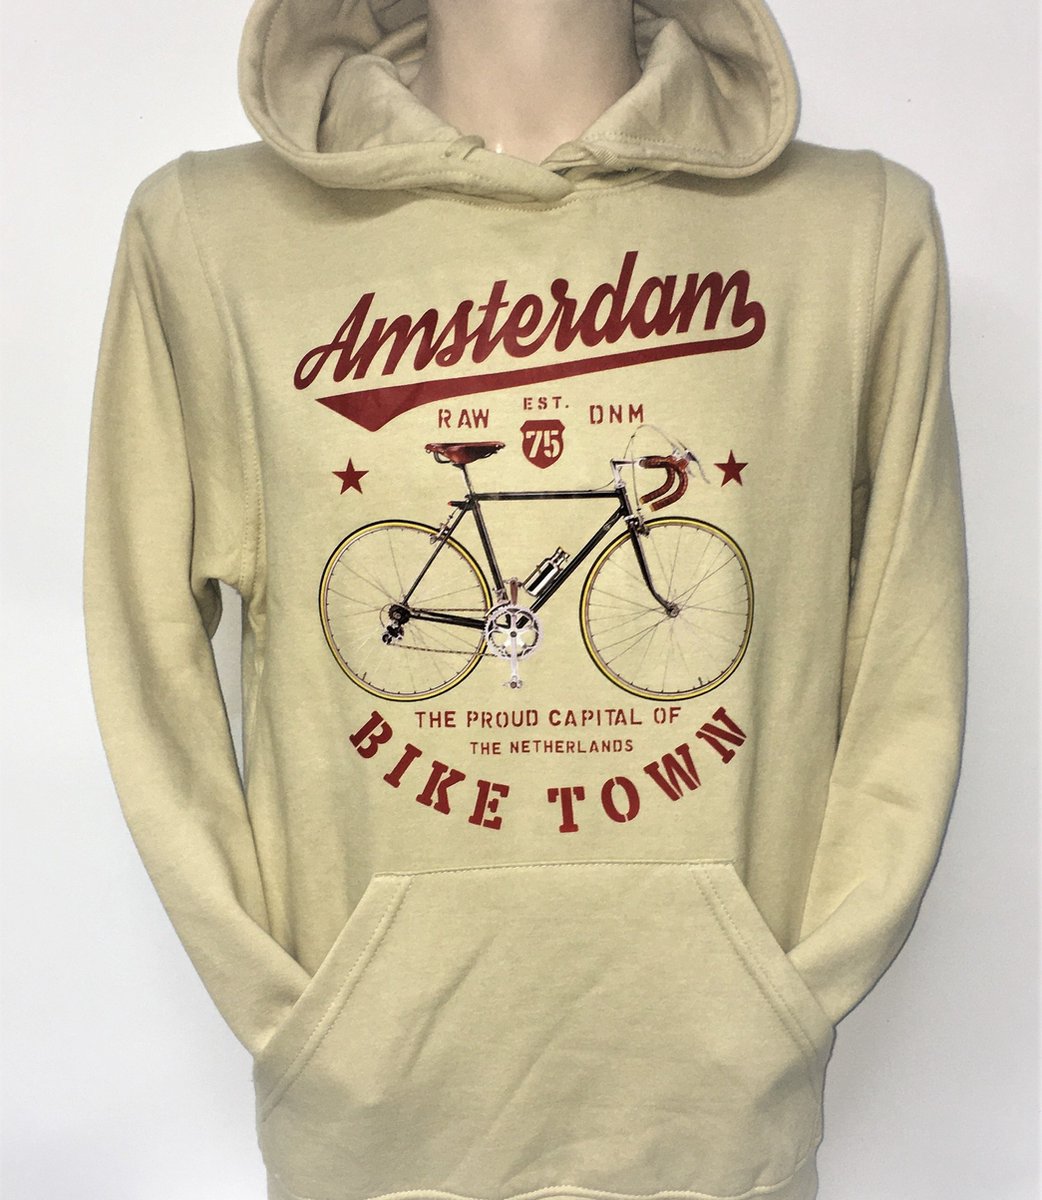 Hooded Sweater - Met Trekkoord - Capuchon - Chill - Trui - Vest - met capuchon - Outdoor - Fiets - Raw - Denim - Race Fiets - Capital Amsterdam - Bike Town - Race Fiets Amsterdam - Zand - Beige - Maat XL